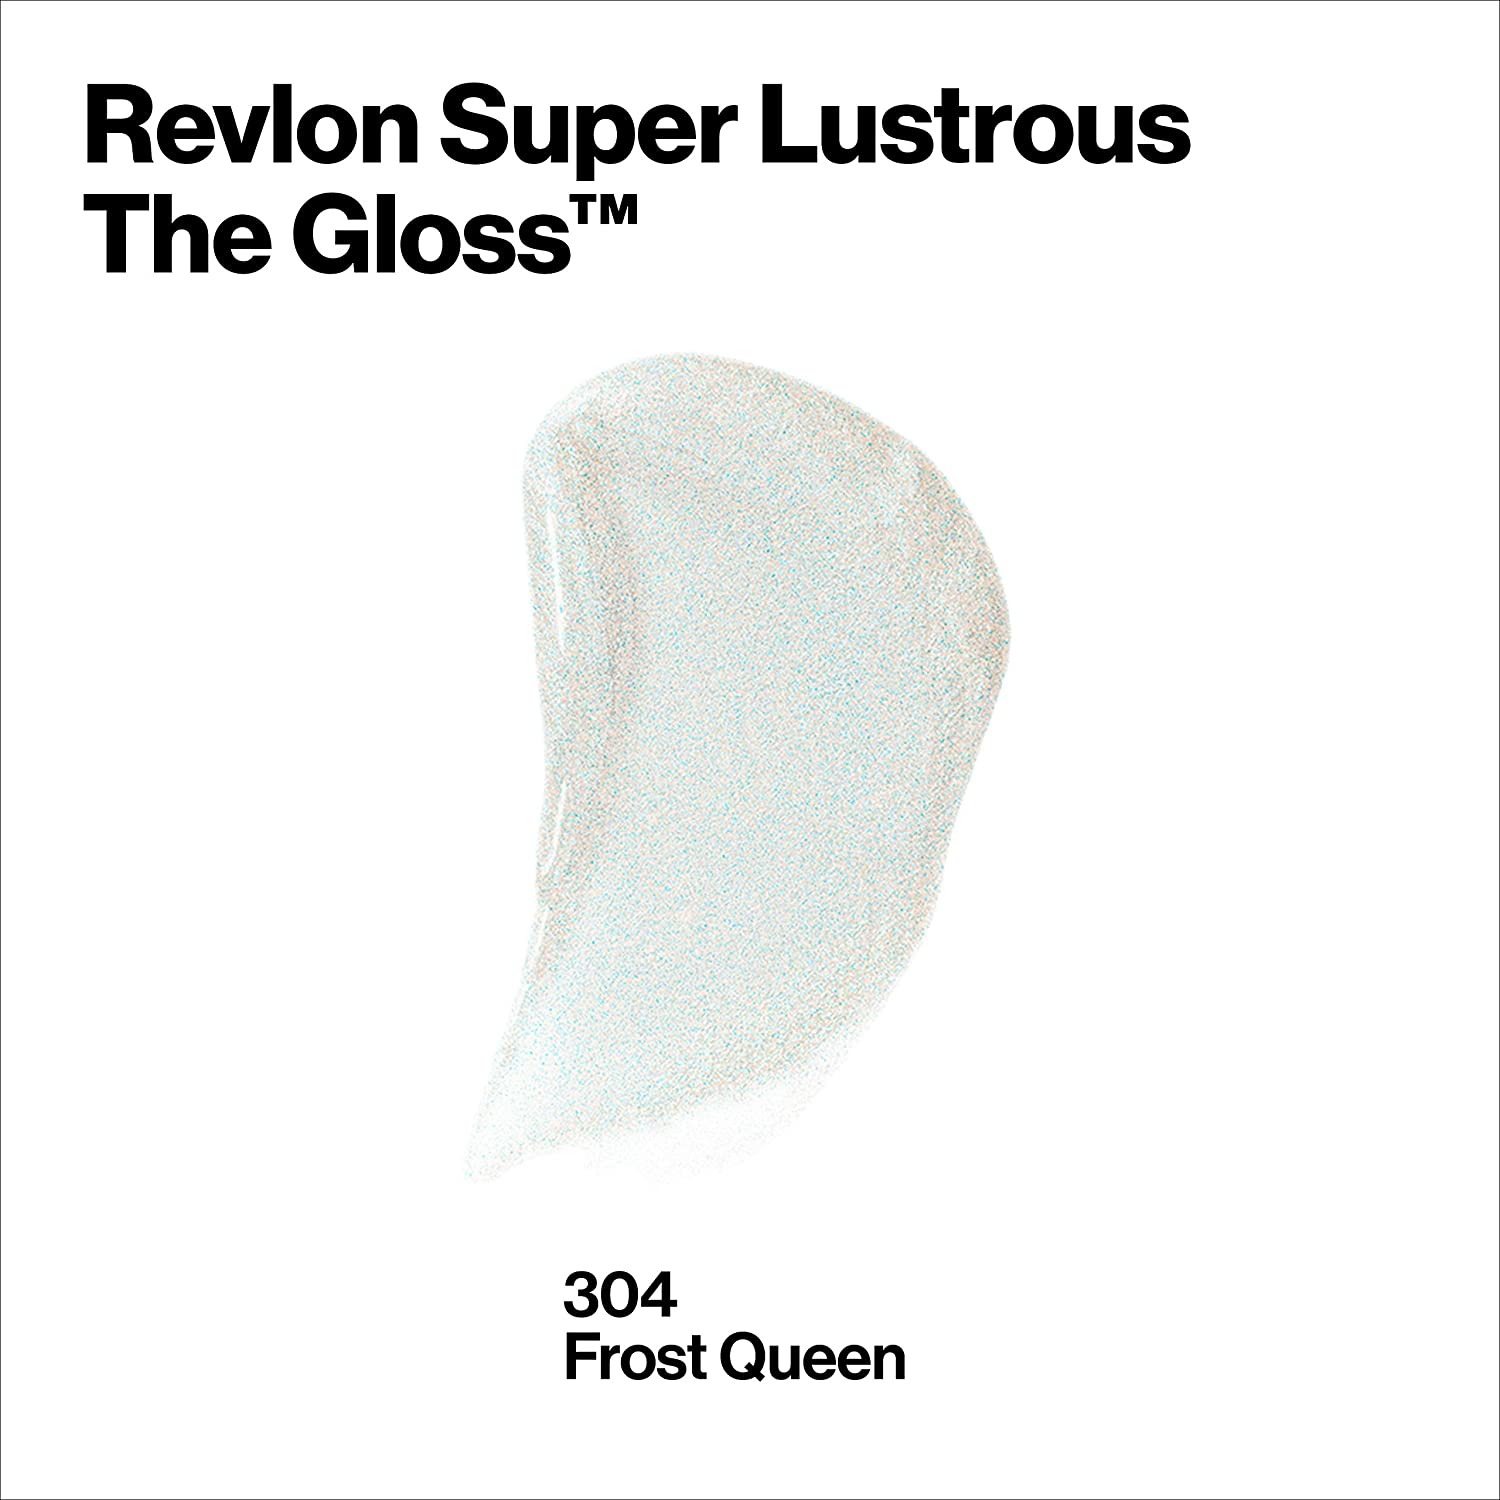 Super Lustrous The Gloss Lip Gloss 3.8ml